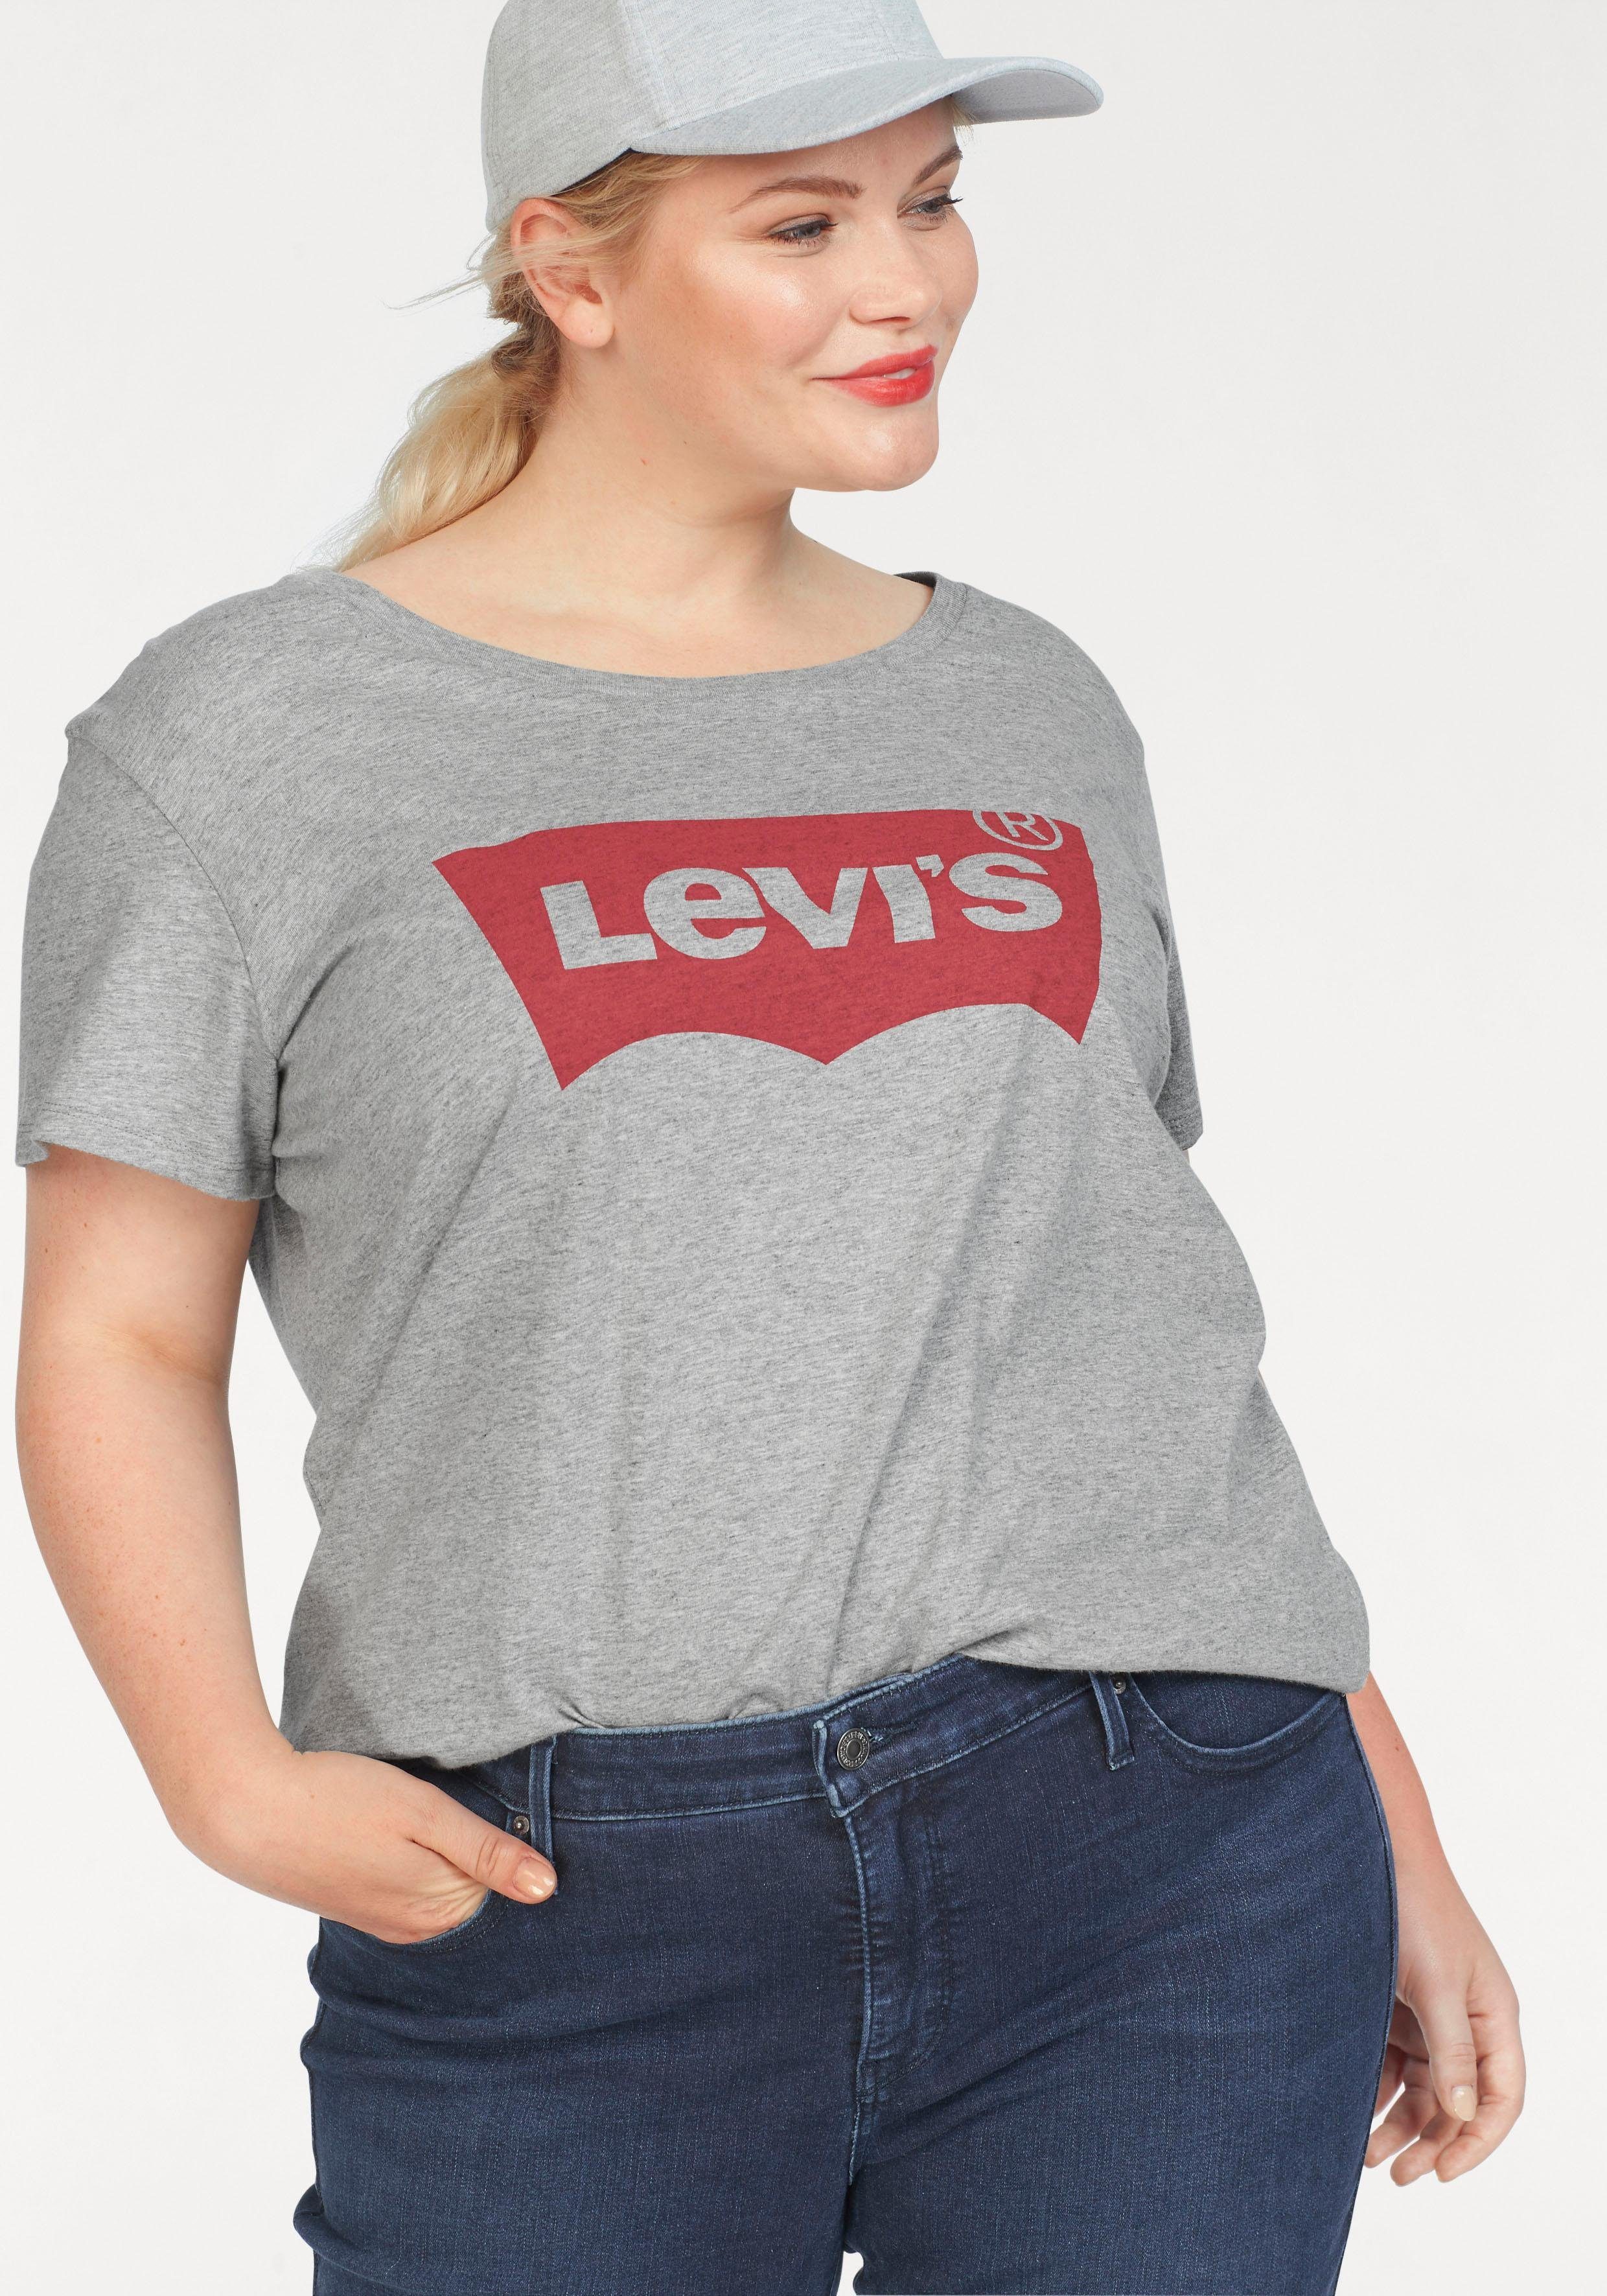 Levi\u2019s T-Shirt hellgrau-rot meliert Casual-Look Mode Shirts T-Shirts Levi’s 